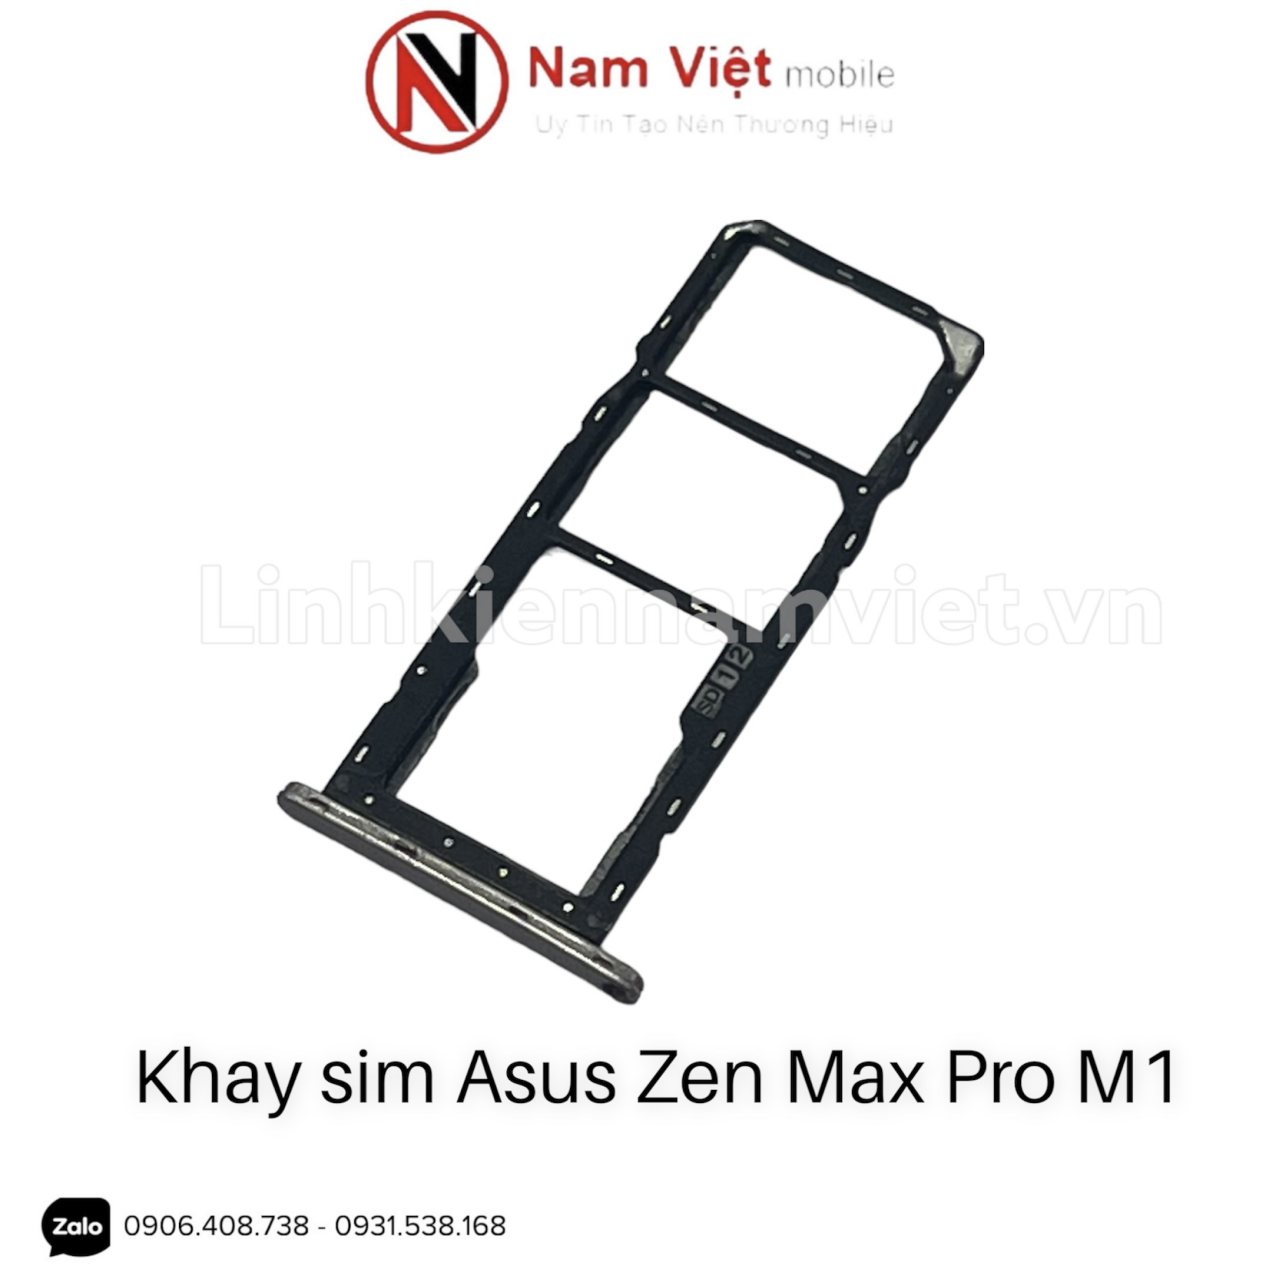 Khay sim Asus Zen Max Pro M1